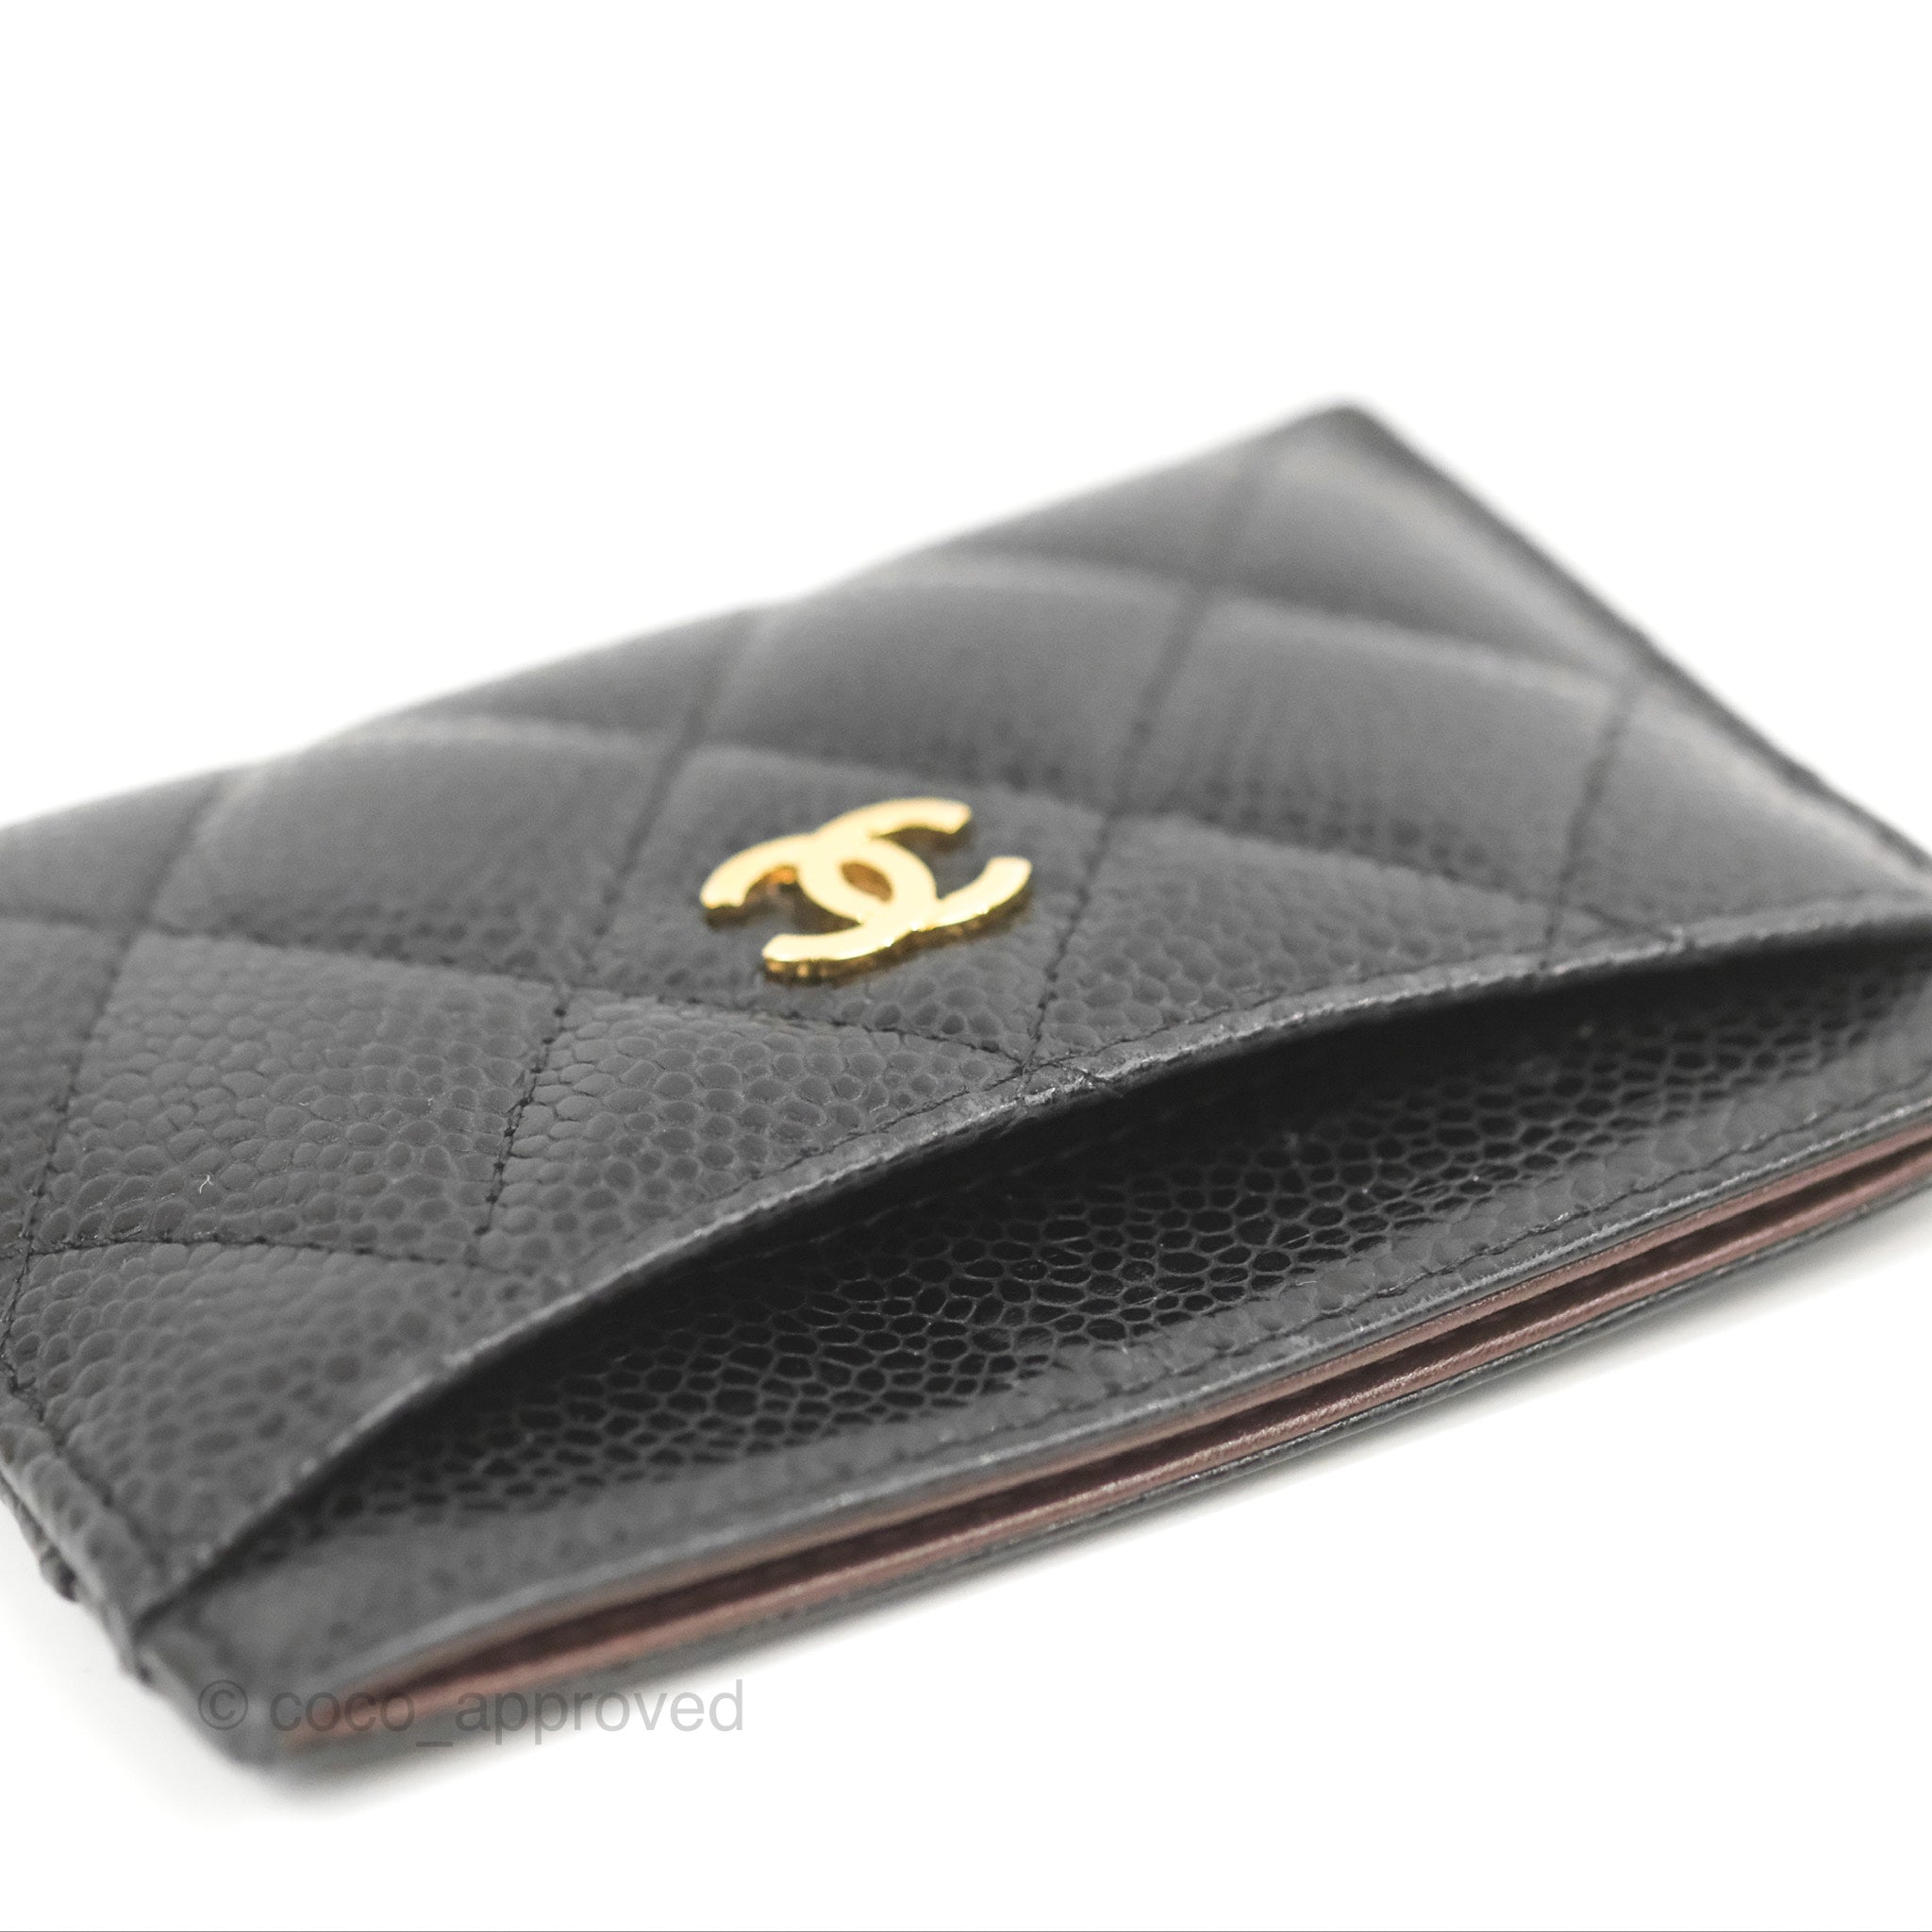 CHANEL Black Caviar Wallet GOLD Card Phone Holder